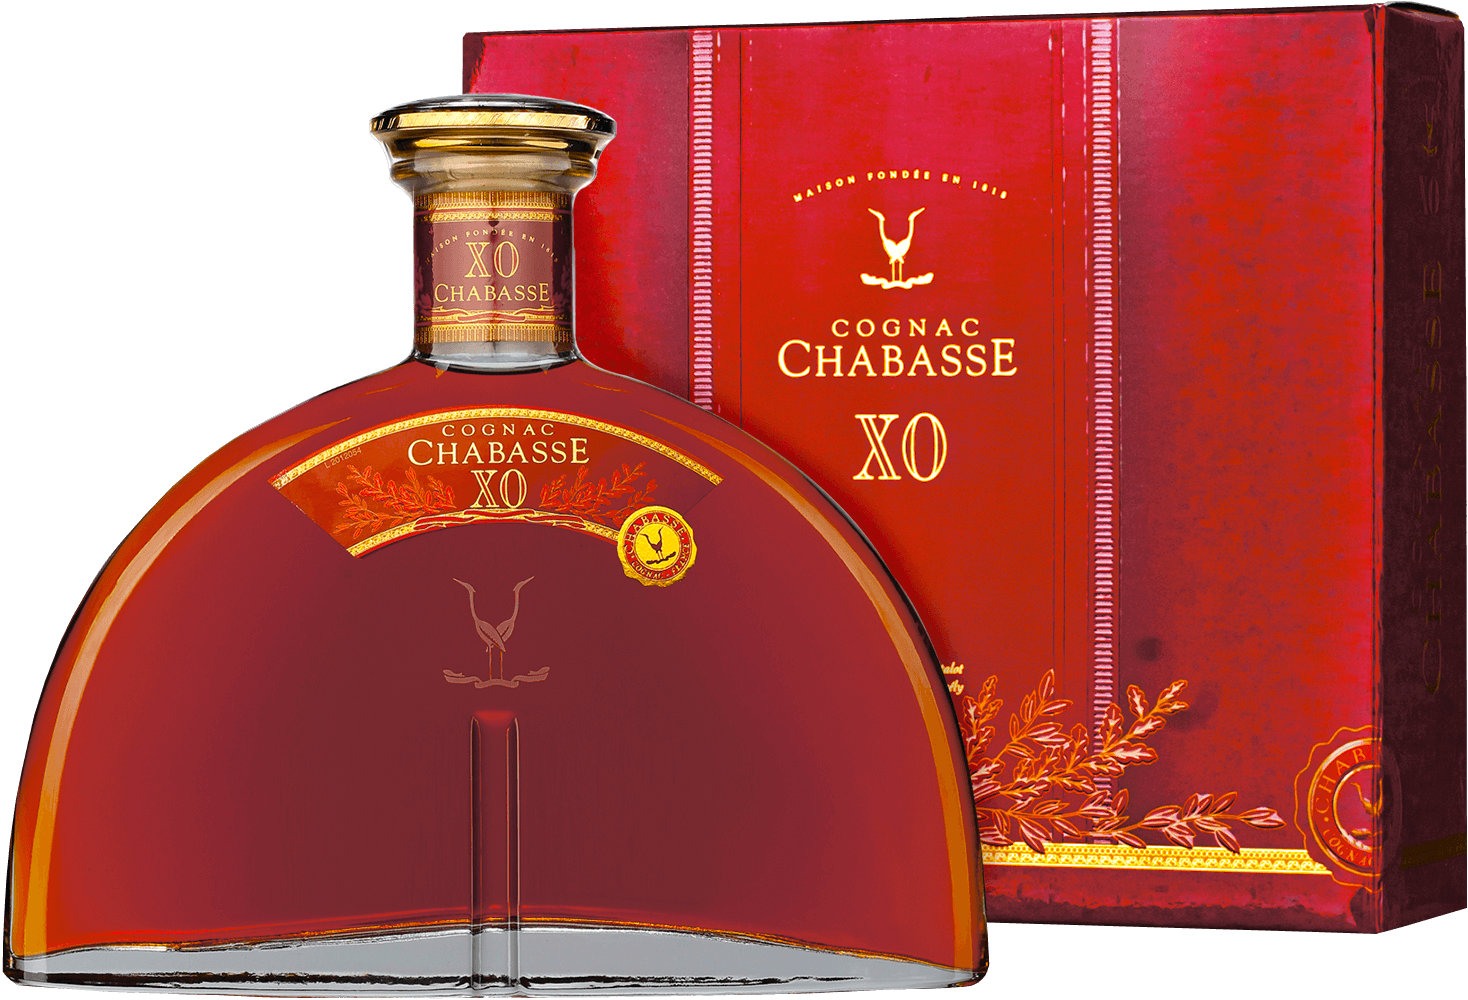 Cognac xo цена. Коньяк Chabasse XO. Французский коньяк Шабасс. 0.7 Л коньяк Шабасс Хо Эксепсьон. Cognac Chabasse selection 0.7.